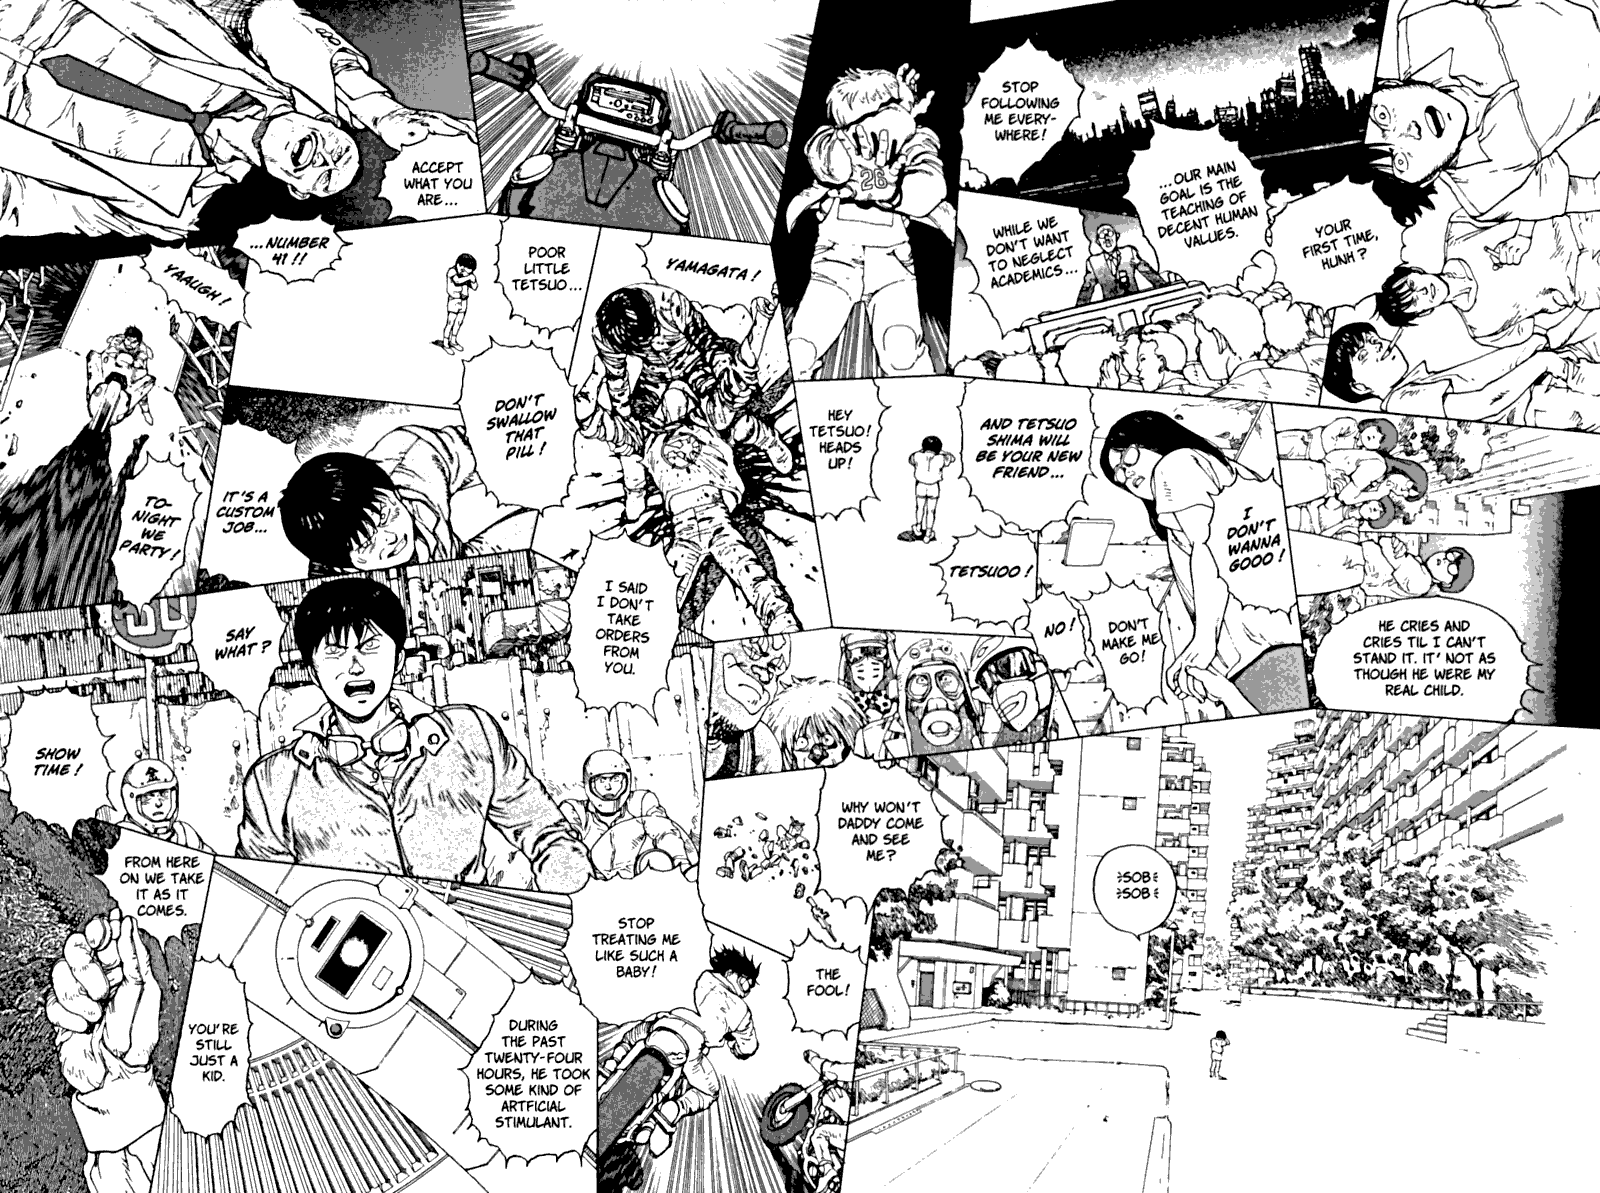 page 335 of akira volume 6 manga at read graphic novel online